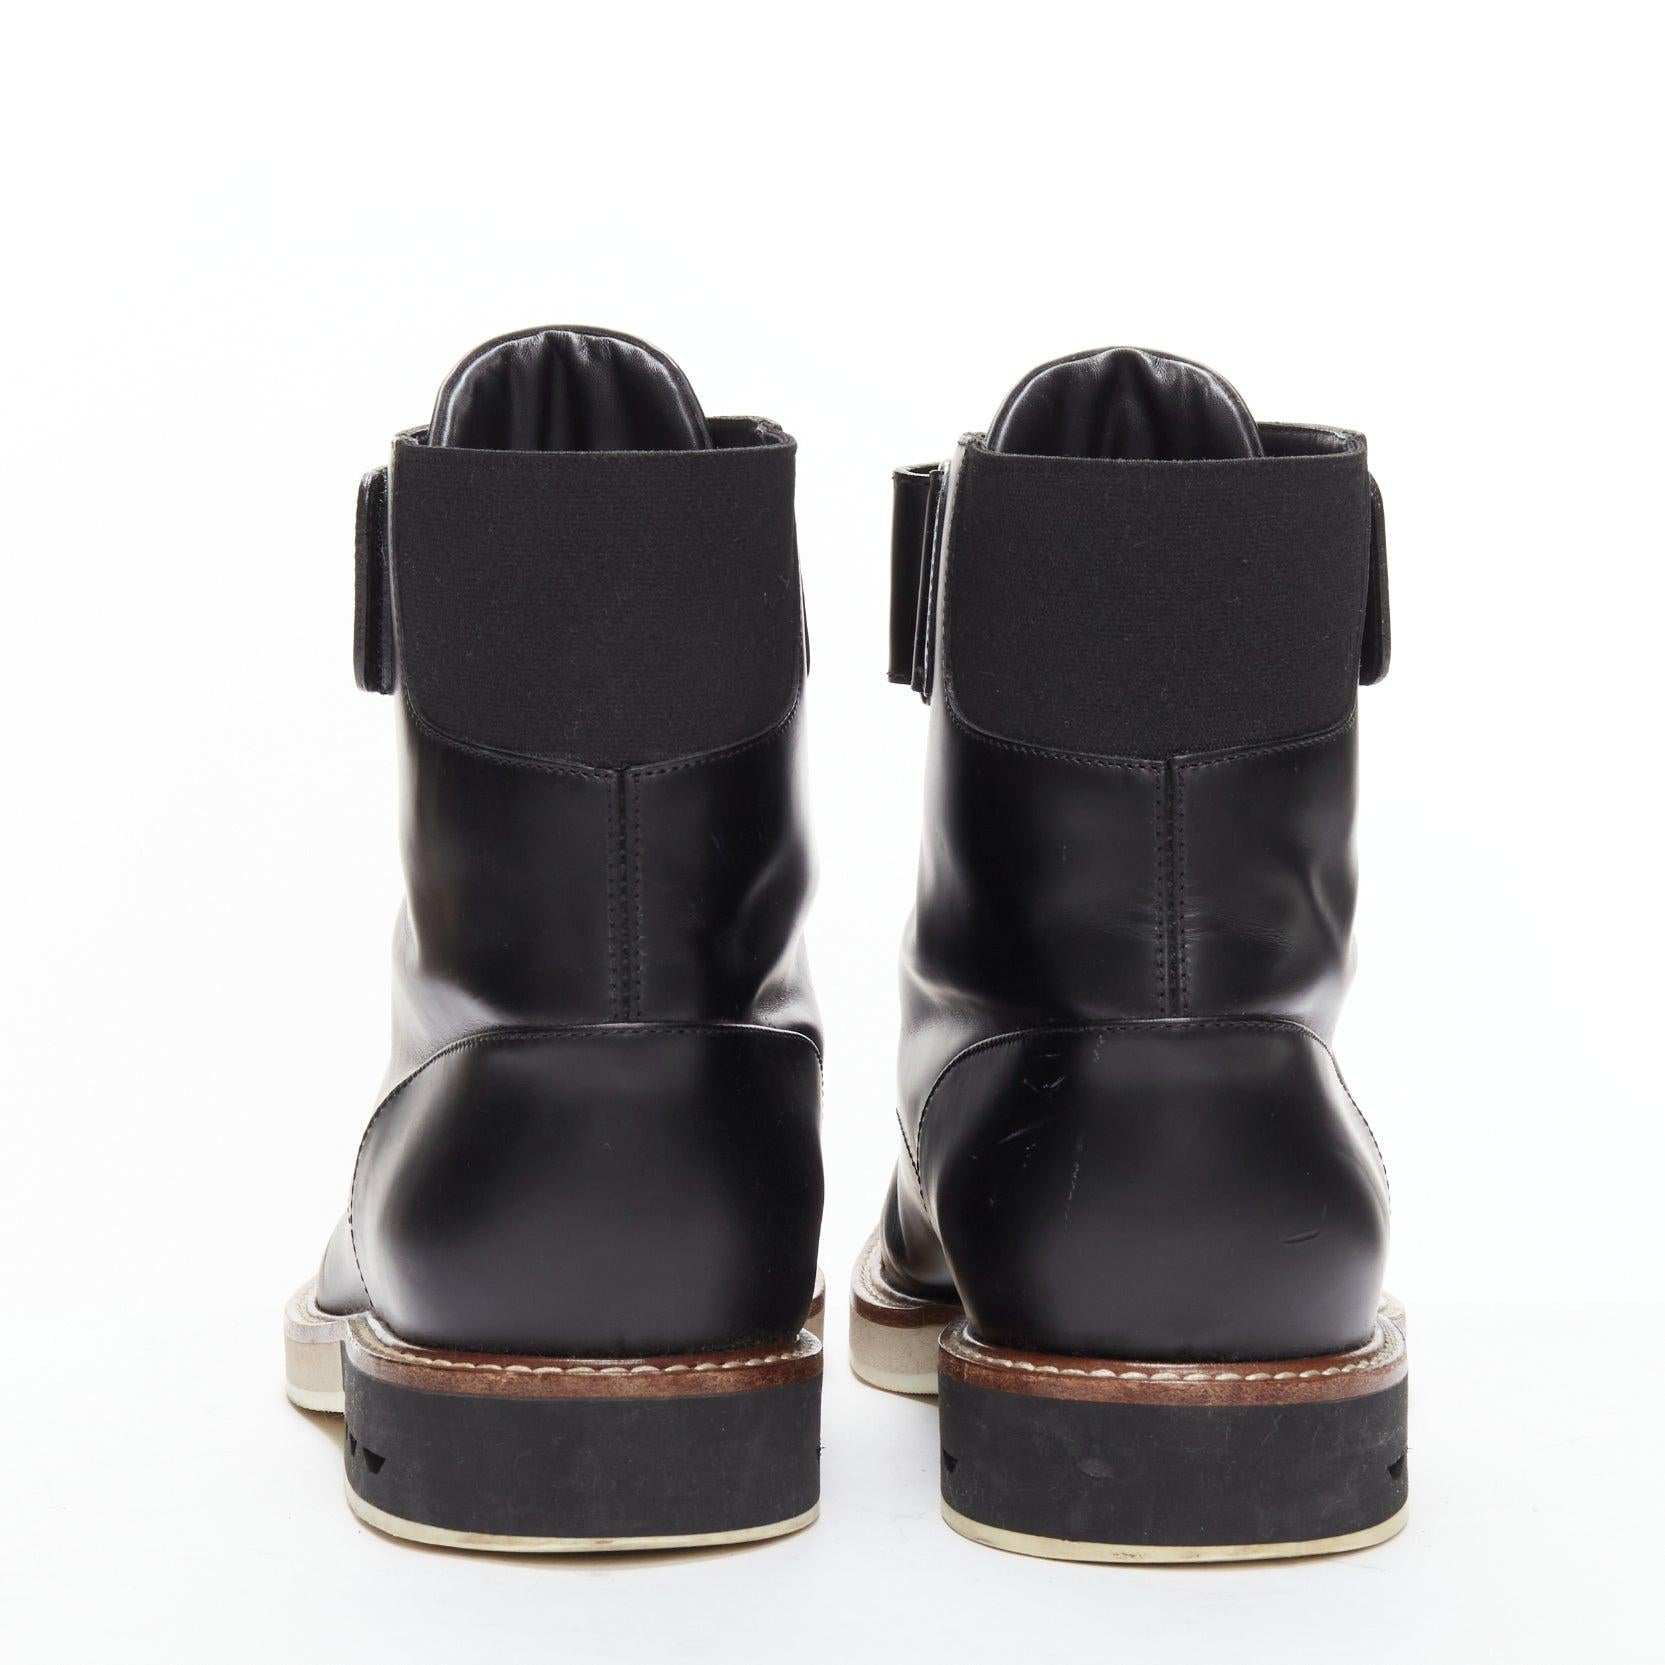 LOUIS VUITTON Sword black leather LV logo hiking lace up boots UK7.5 EU41.5 For Sale 1